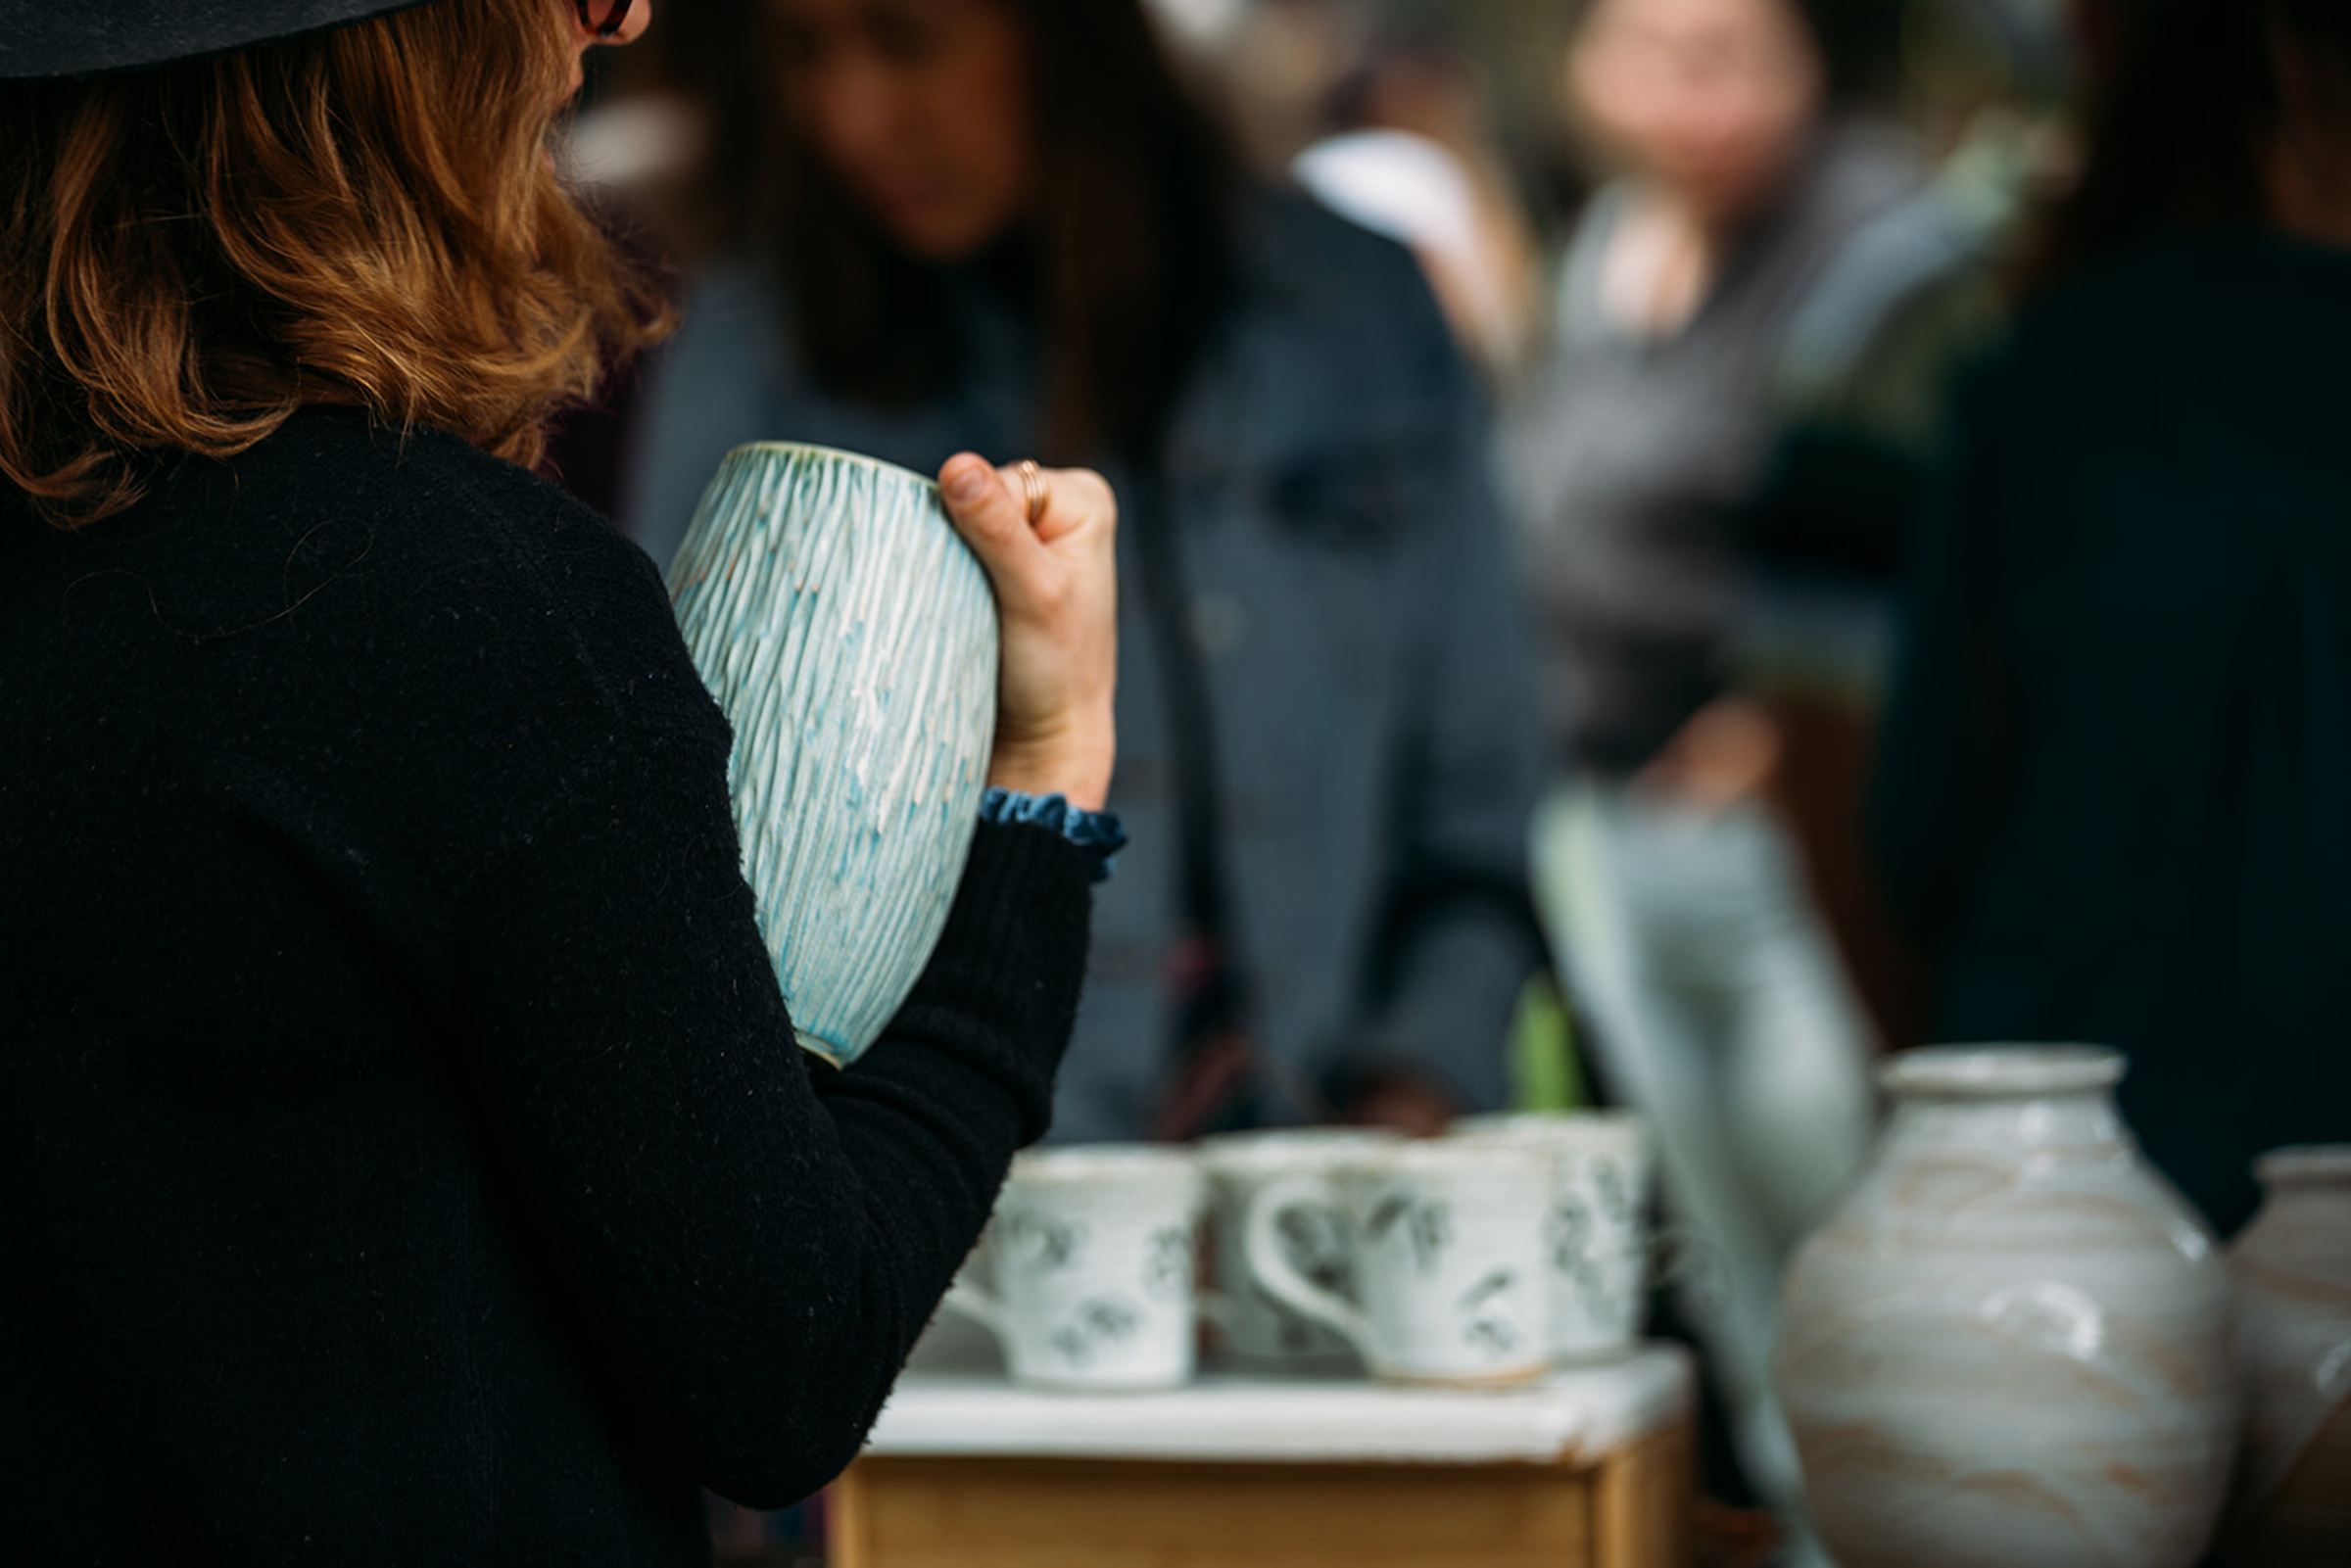 Woman holding ceramic vase in market setting.